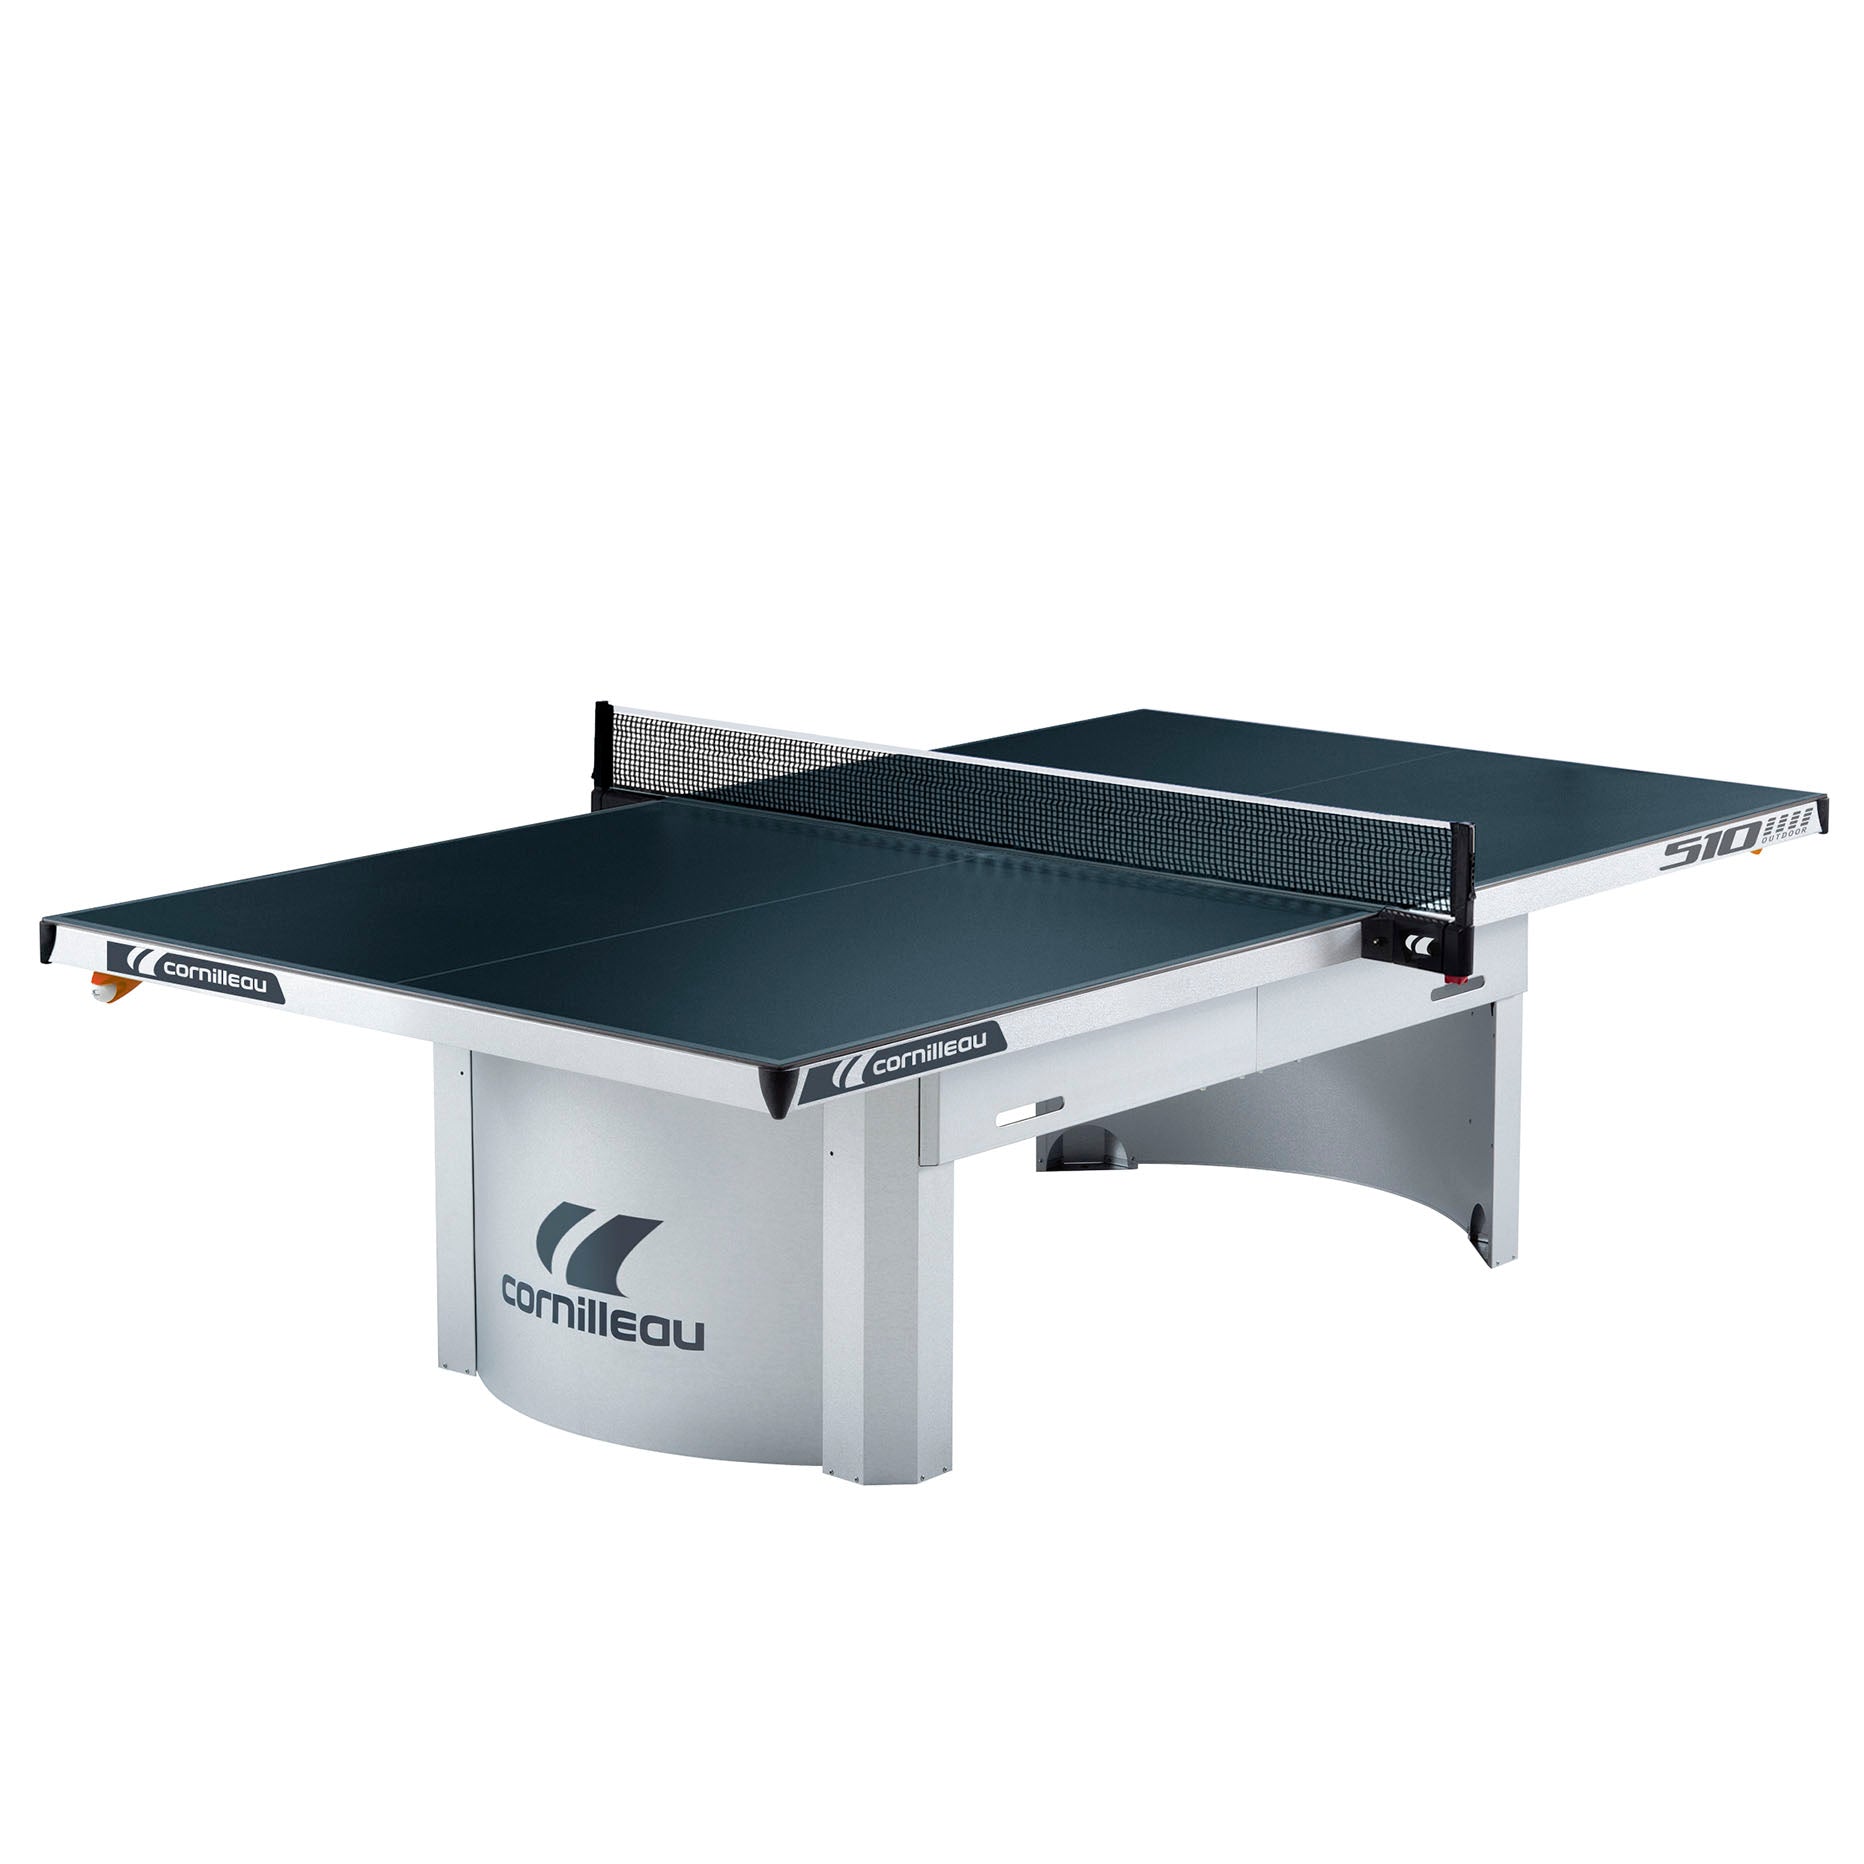 Cornilleau Proline 510 Static Outdoor Table Tennis Table